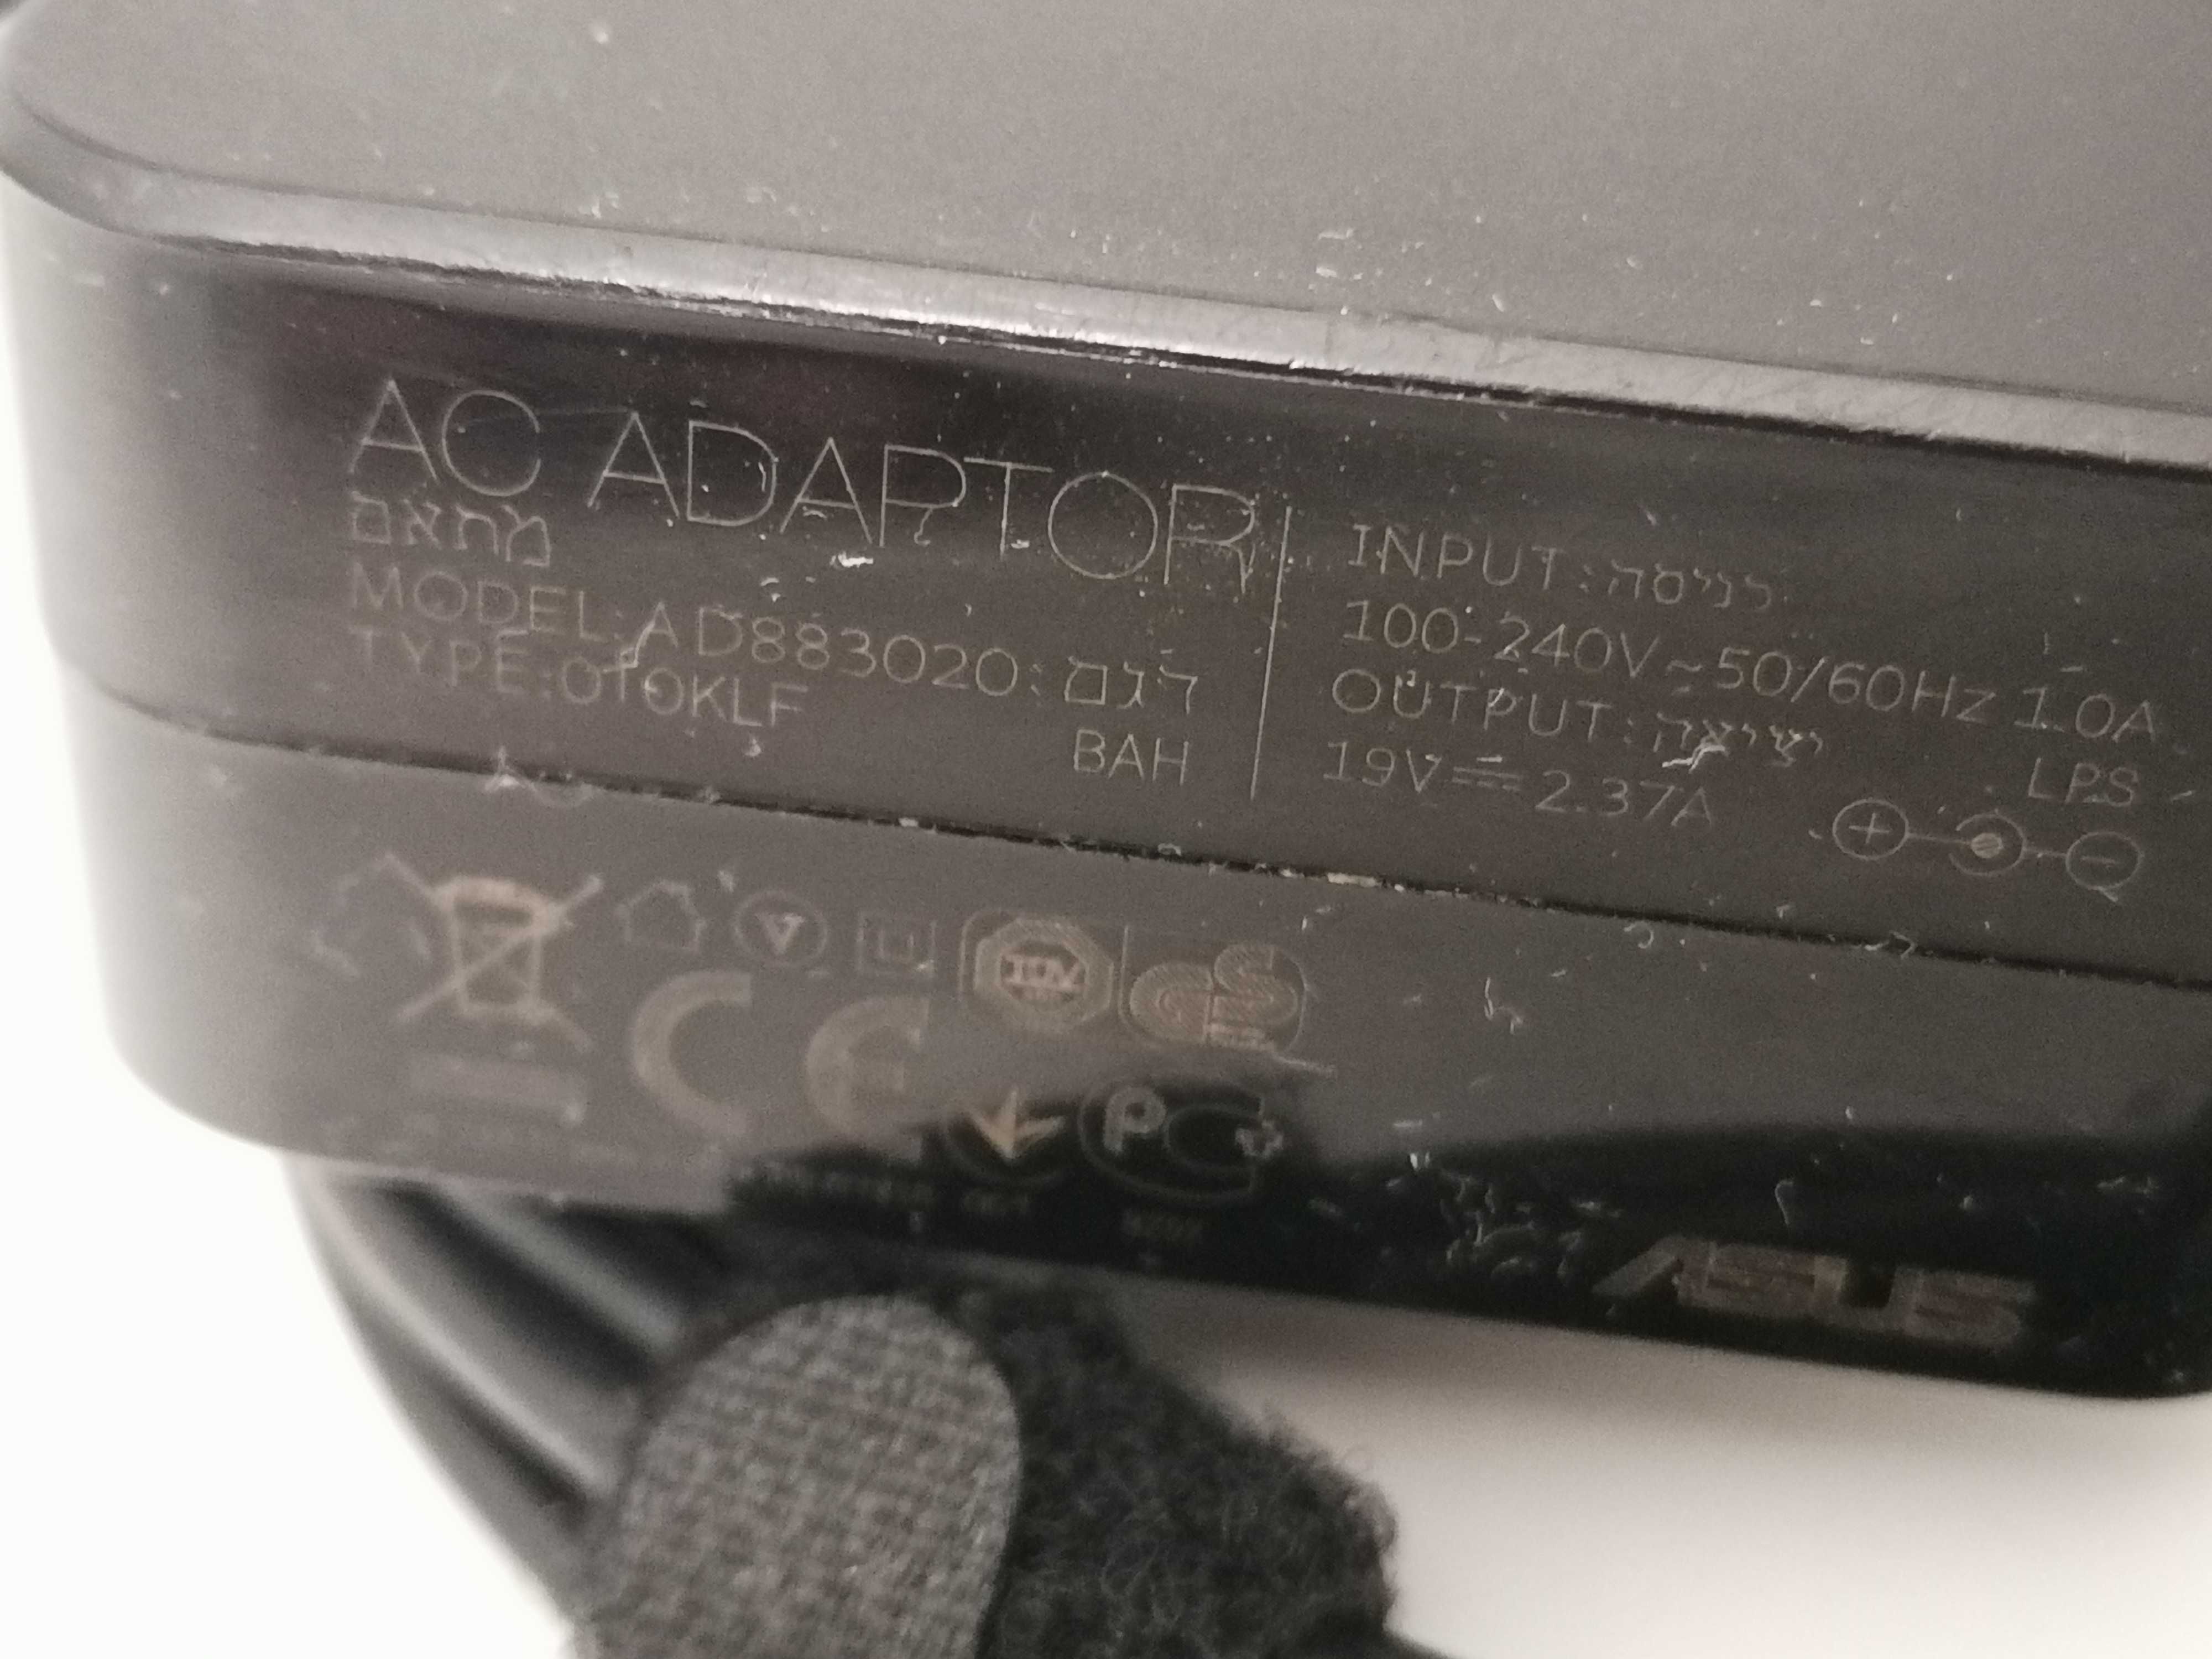 Адаптер Asus AD883020, Type 010KLF (19V, 2.37A, 45 Watt)